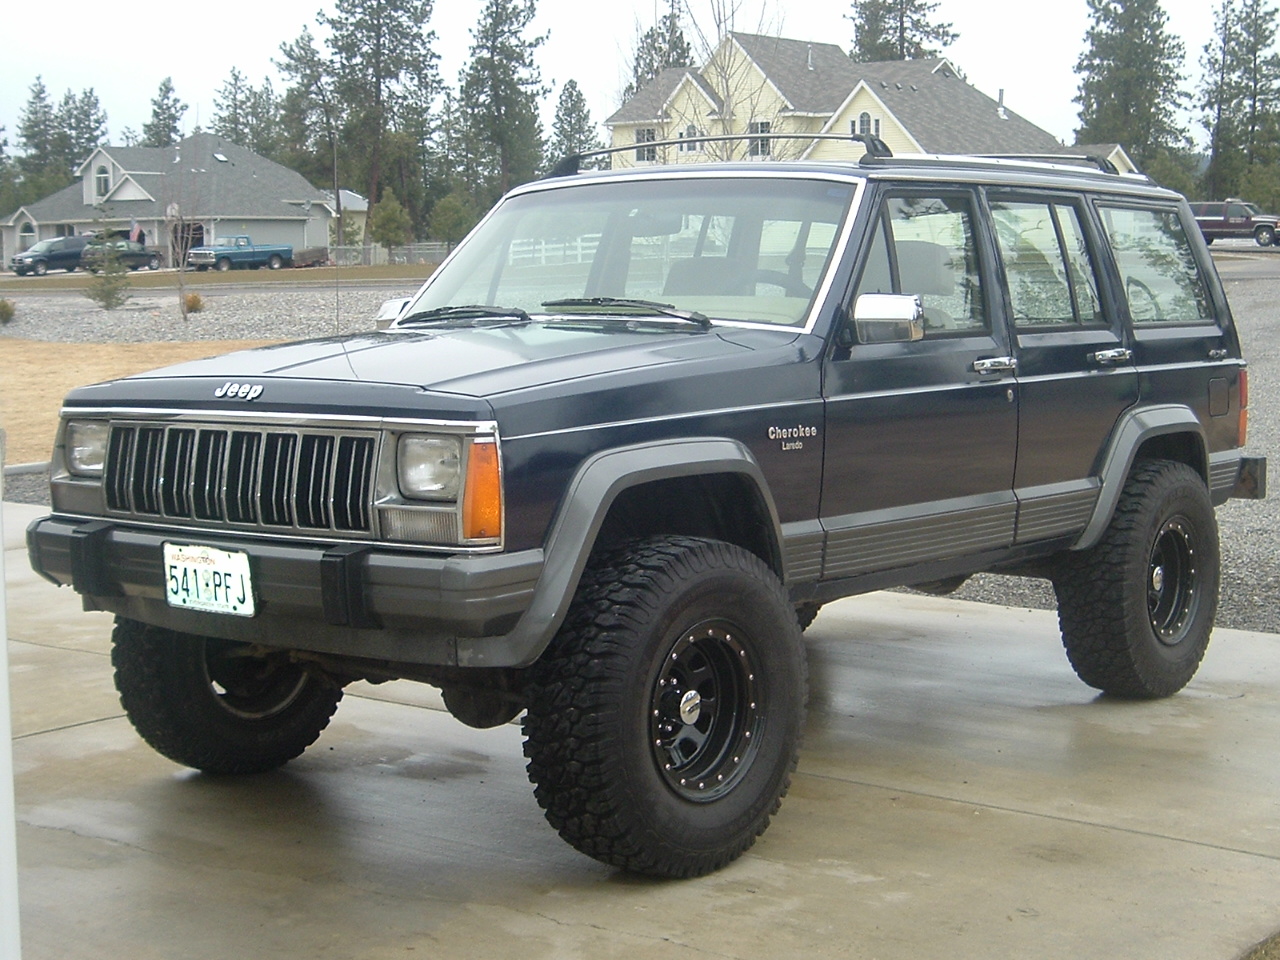 1990 Jeep cherokee pics